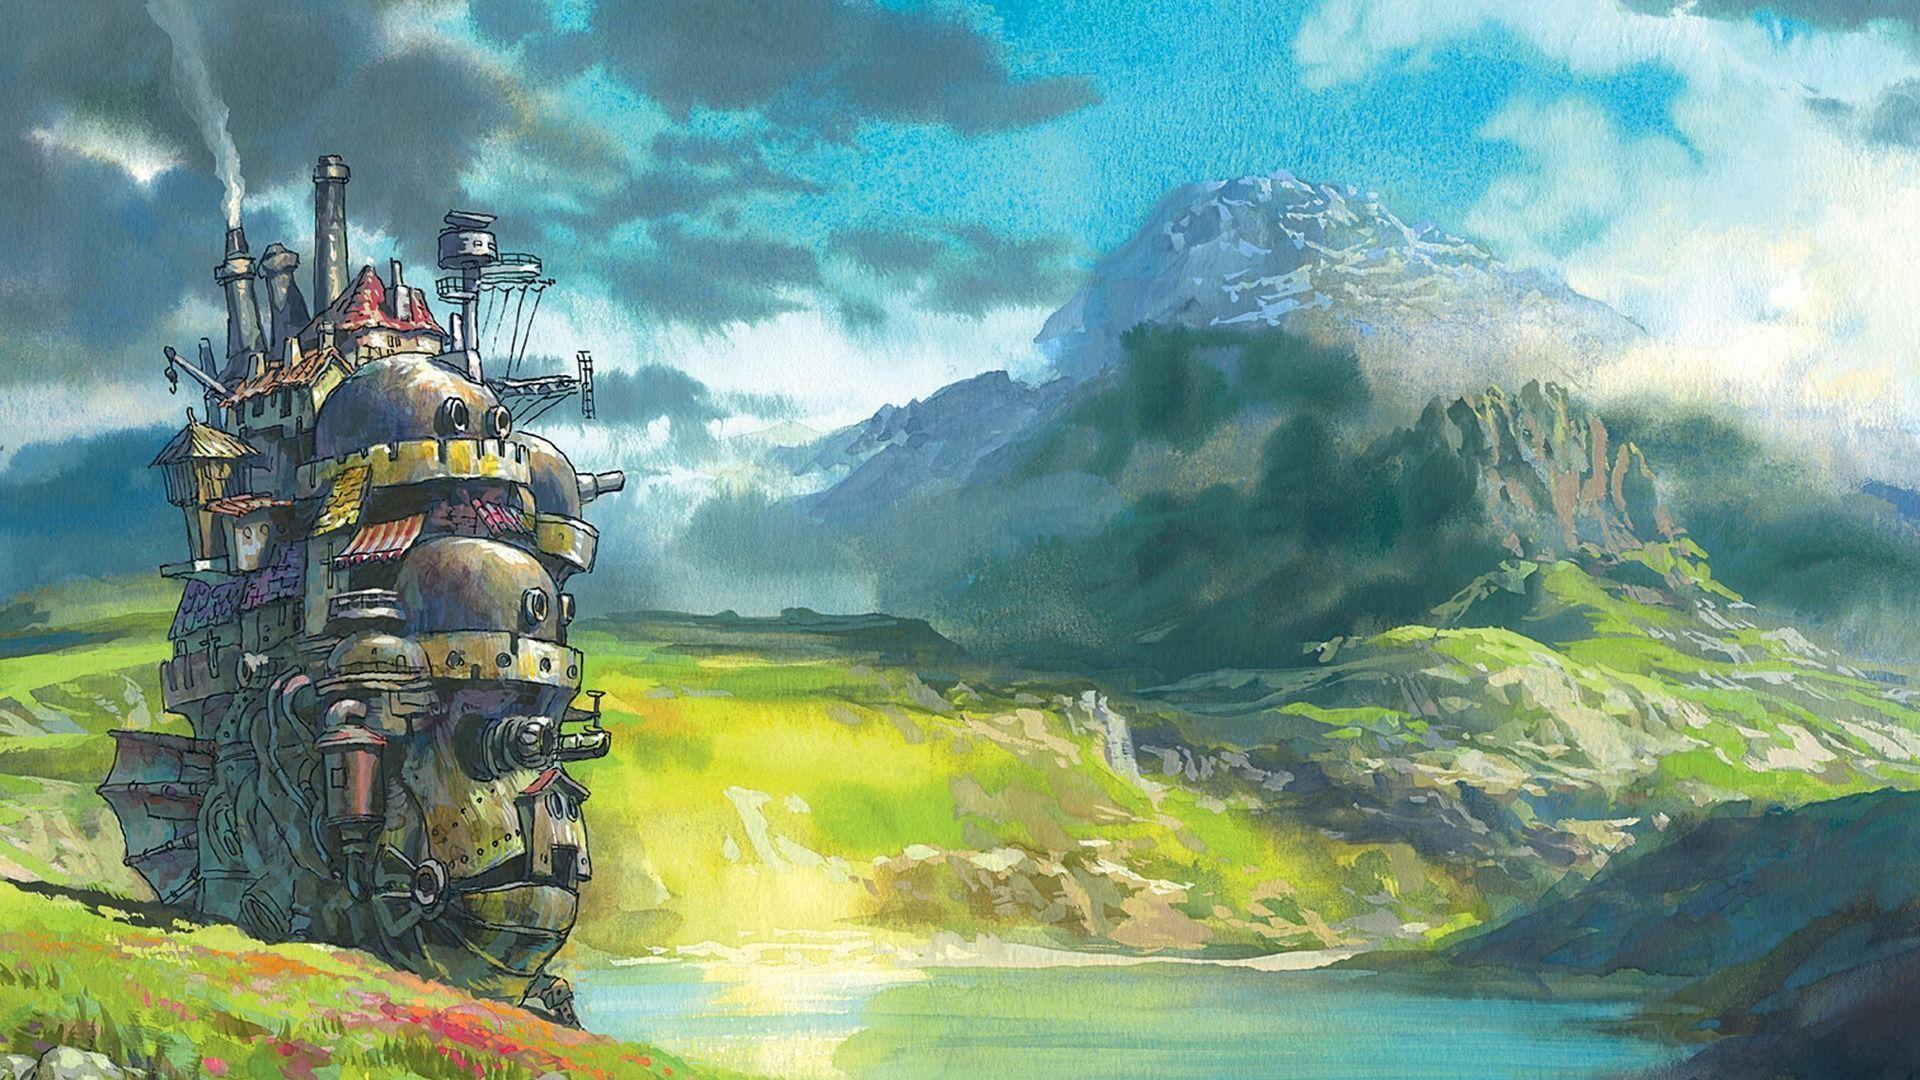 Studio Ghibli HD Wallpaperx1080. Howls moving castle wallpaper, Ghibli art, Studio ghibli background